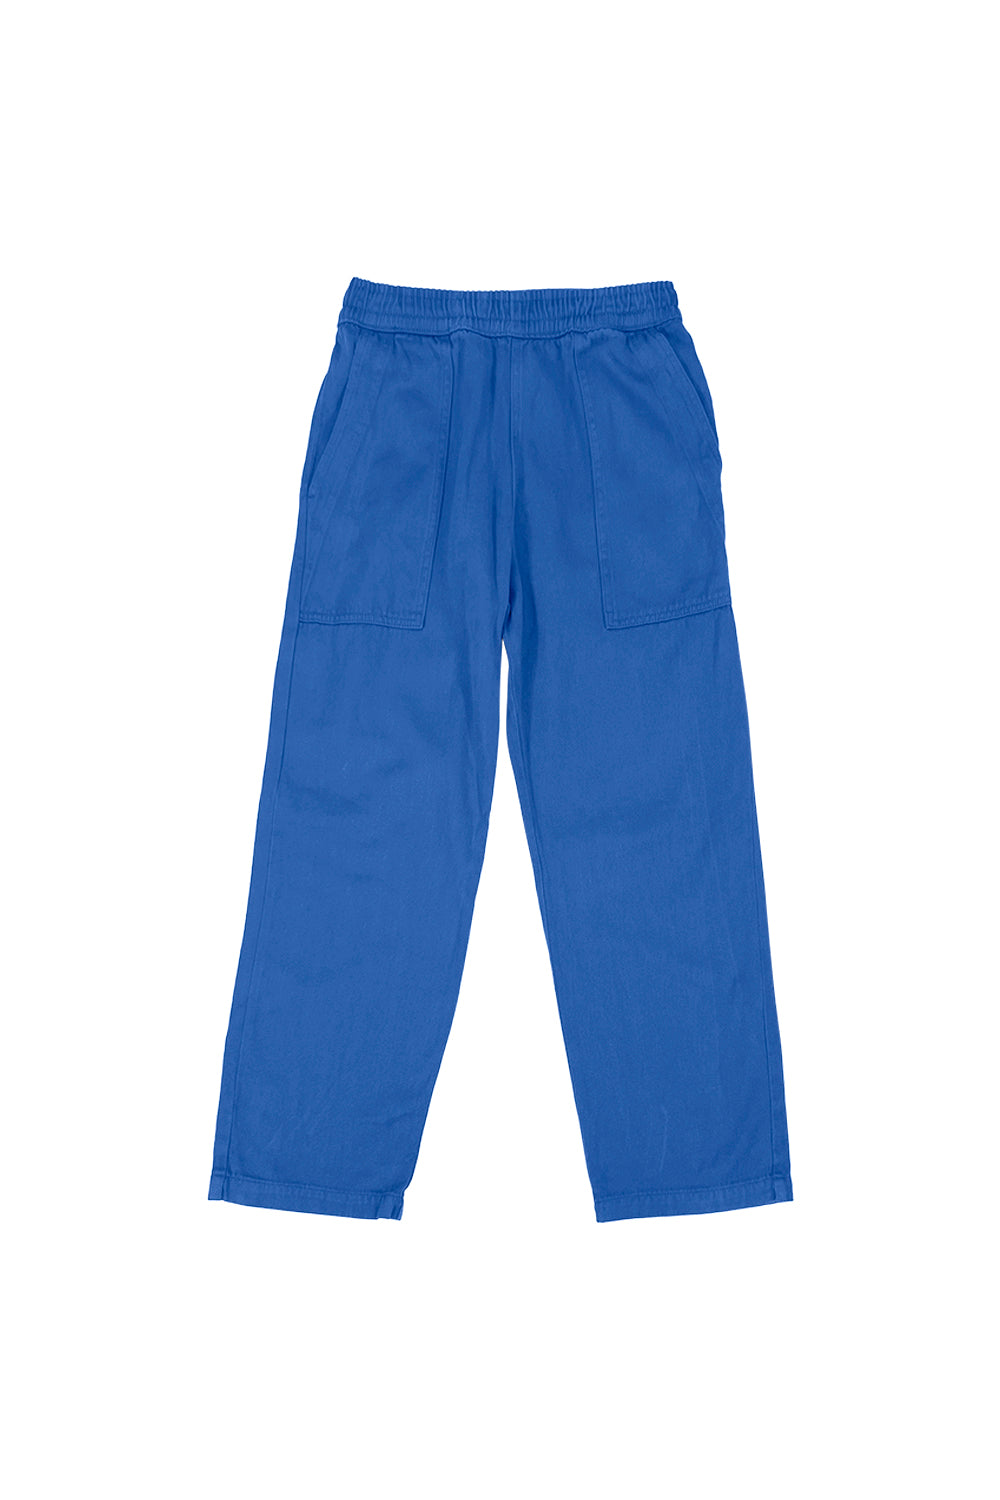 Ocean Pant | Jungmaven Hemp Clothing & Accessories / Color: Galaxy Blue